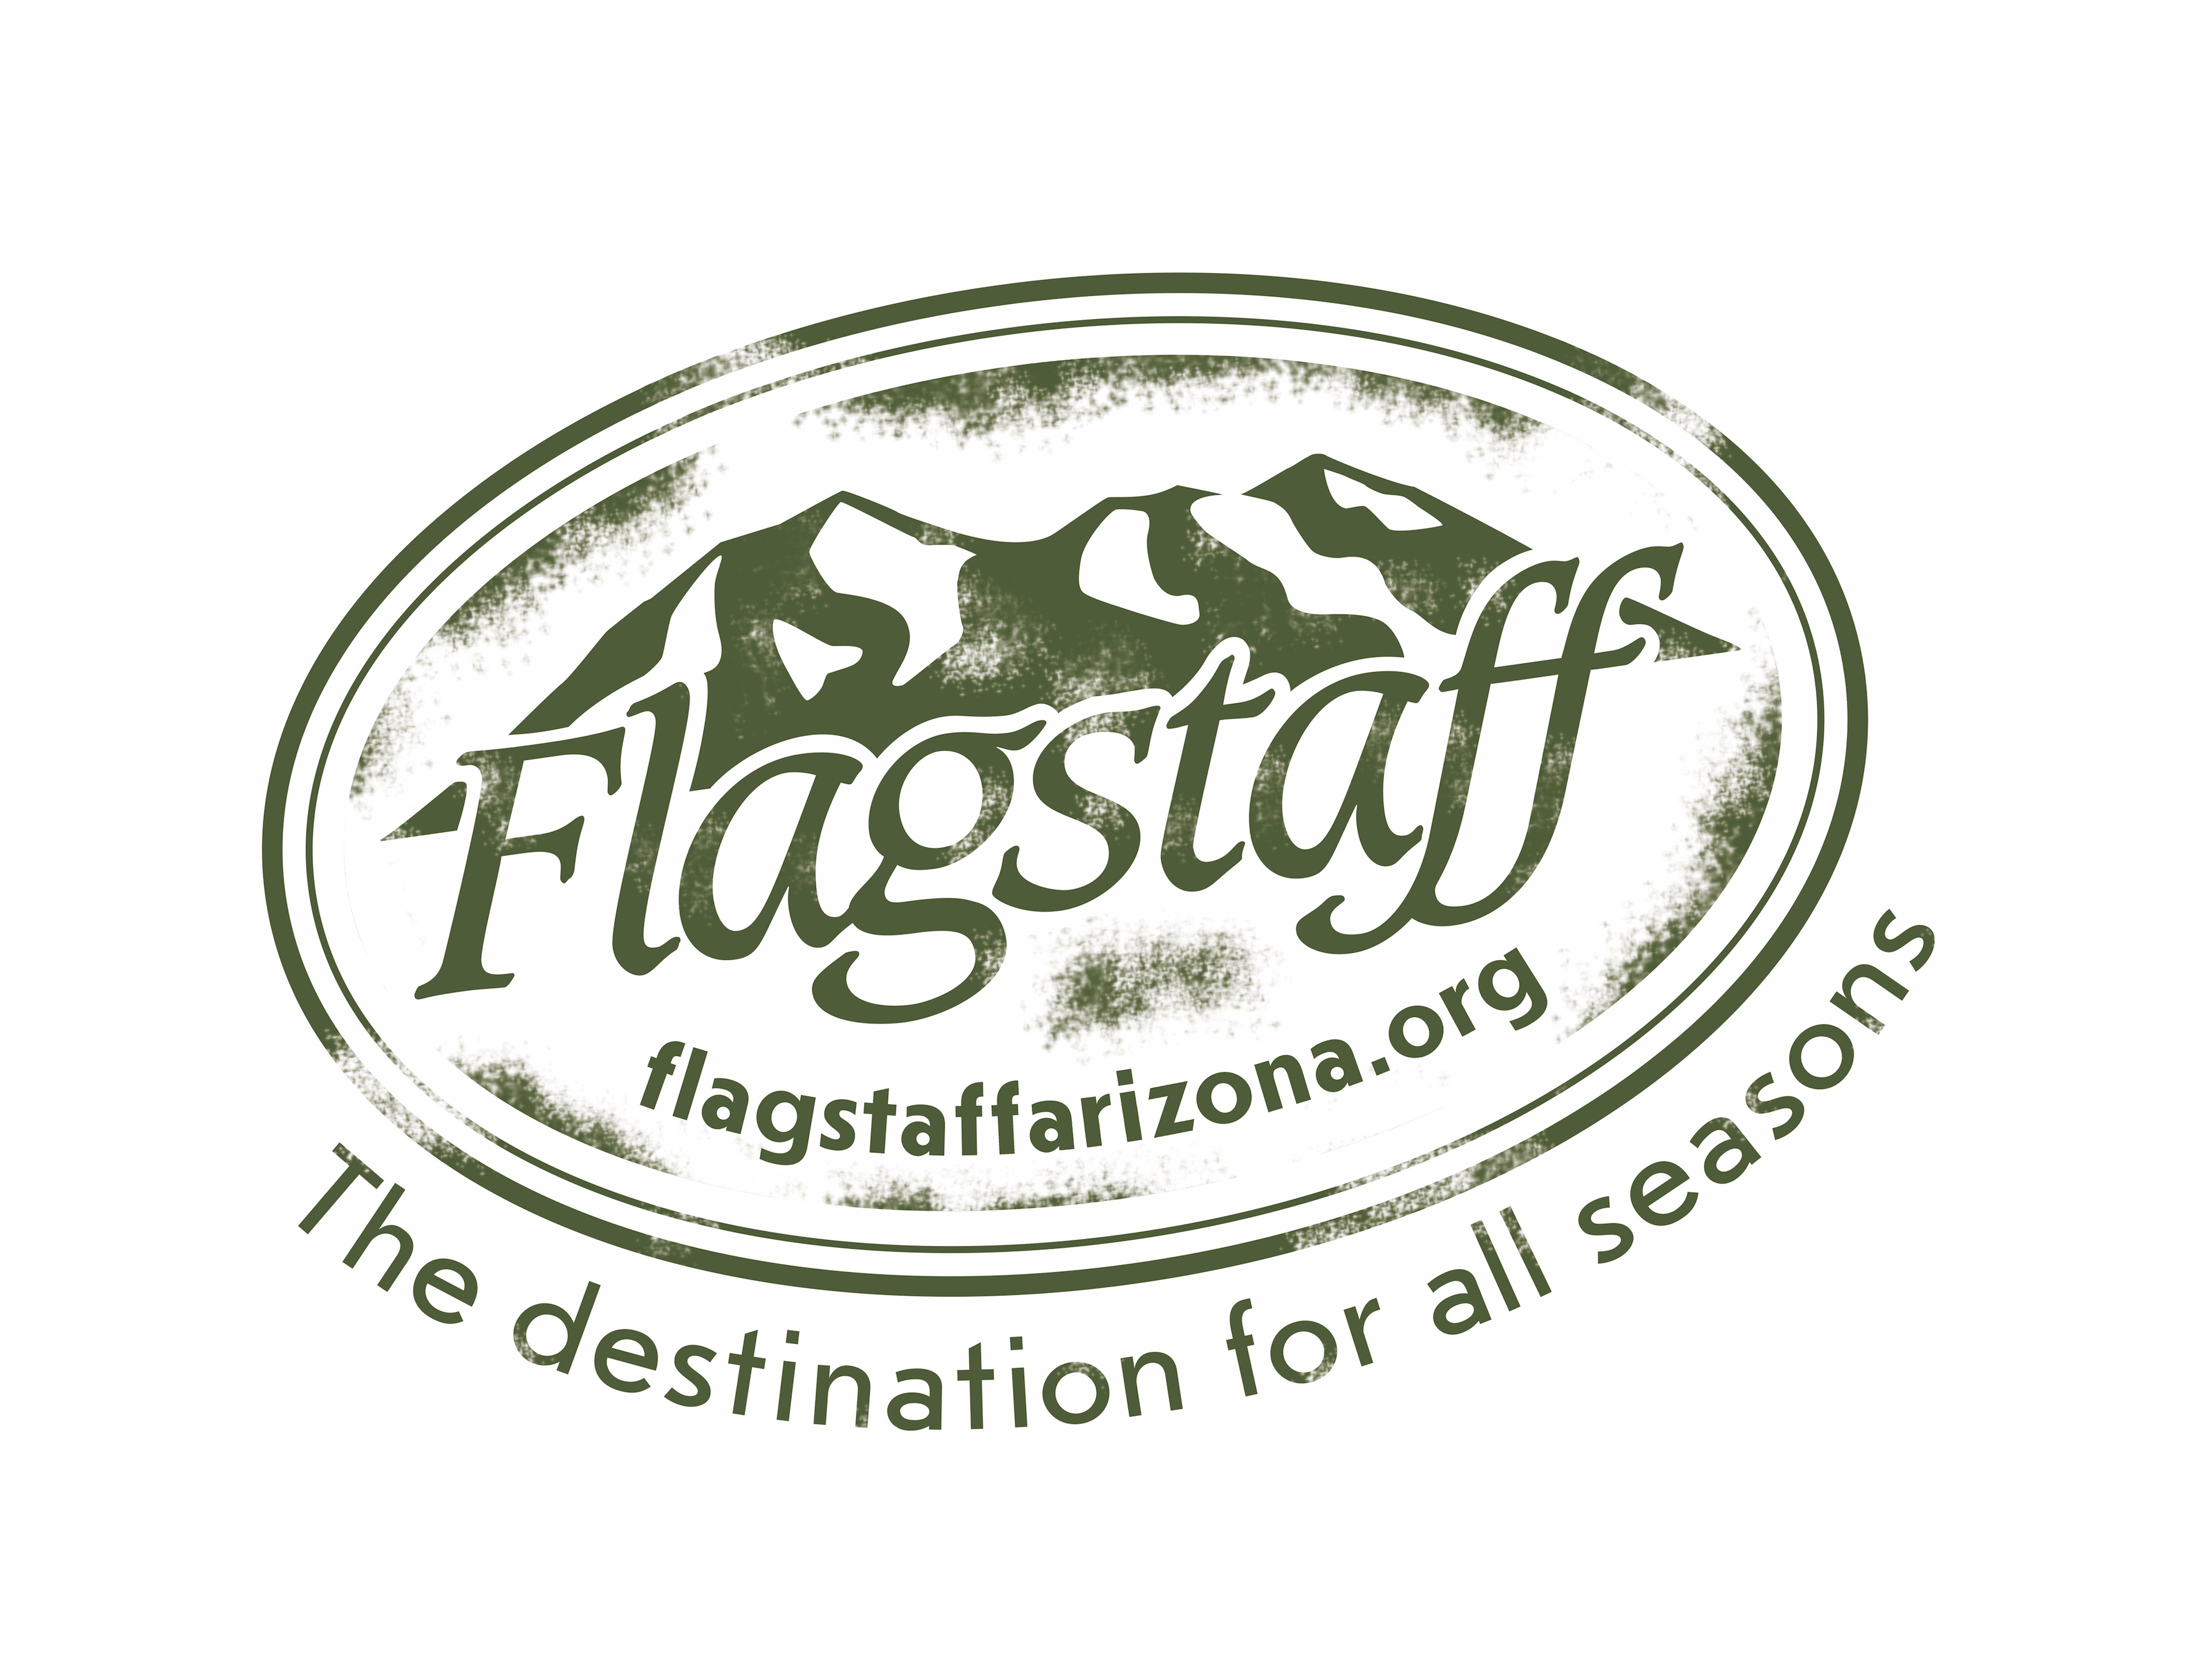 New Nonstop Service to Flagstaff/Grand Canyon, Arizona (FLG), Announced3838 x 2909